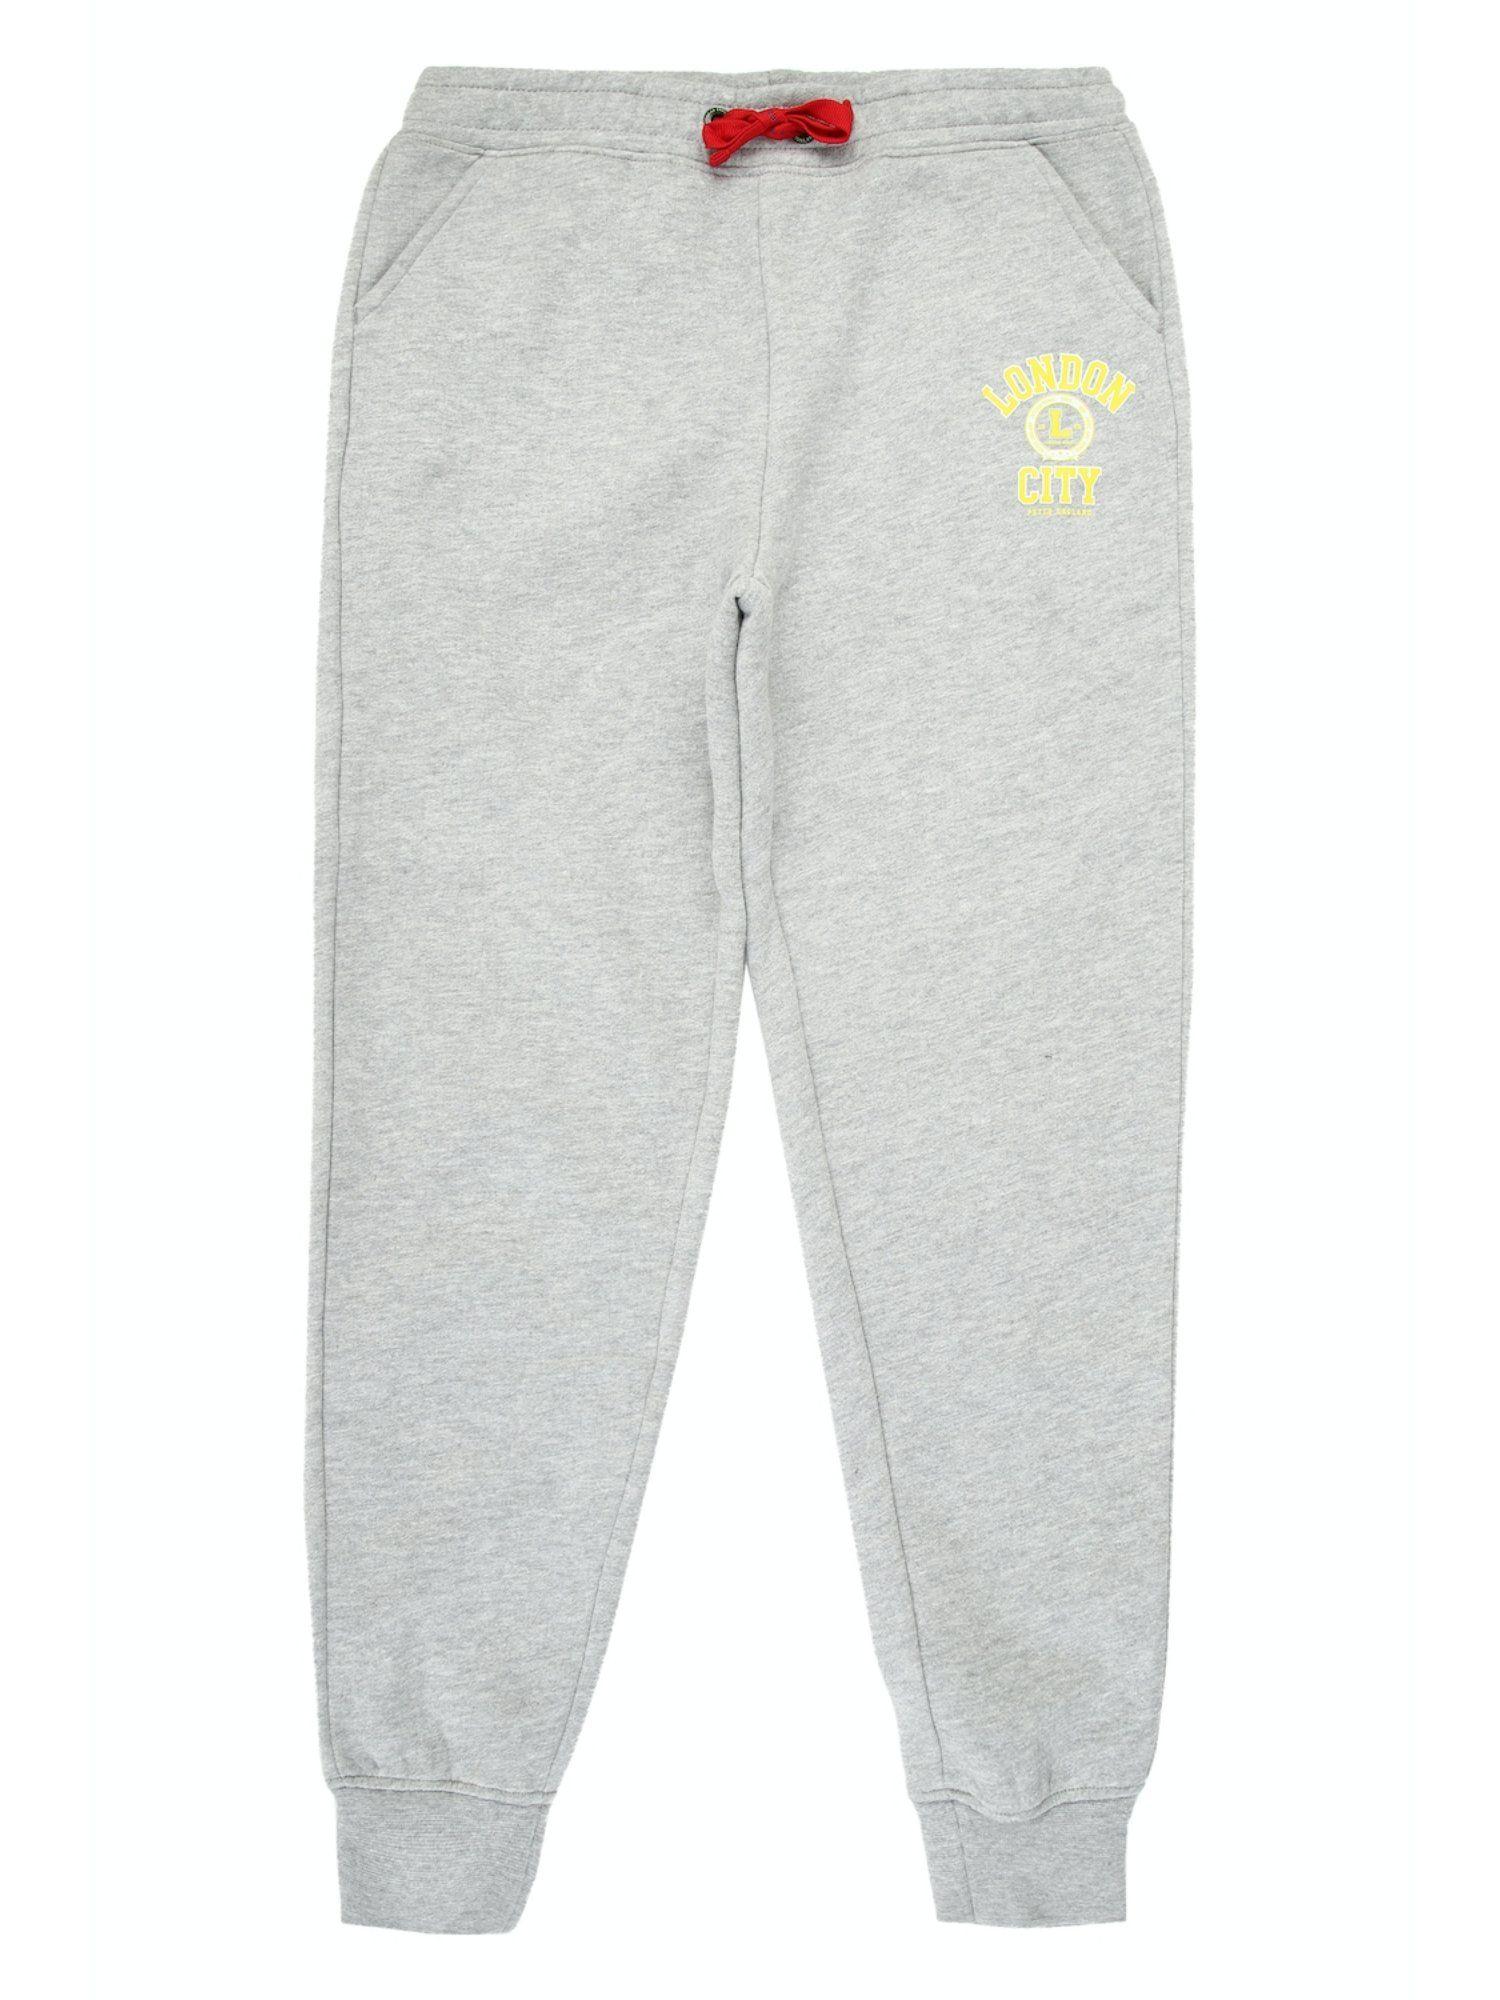 girls grey soild jogger pants